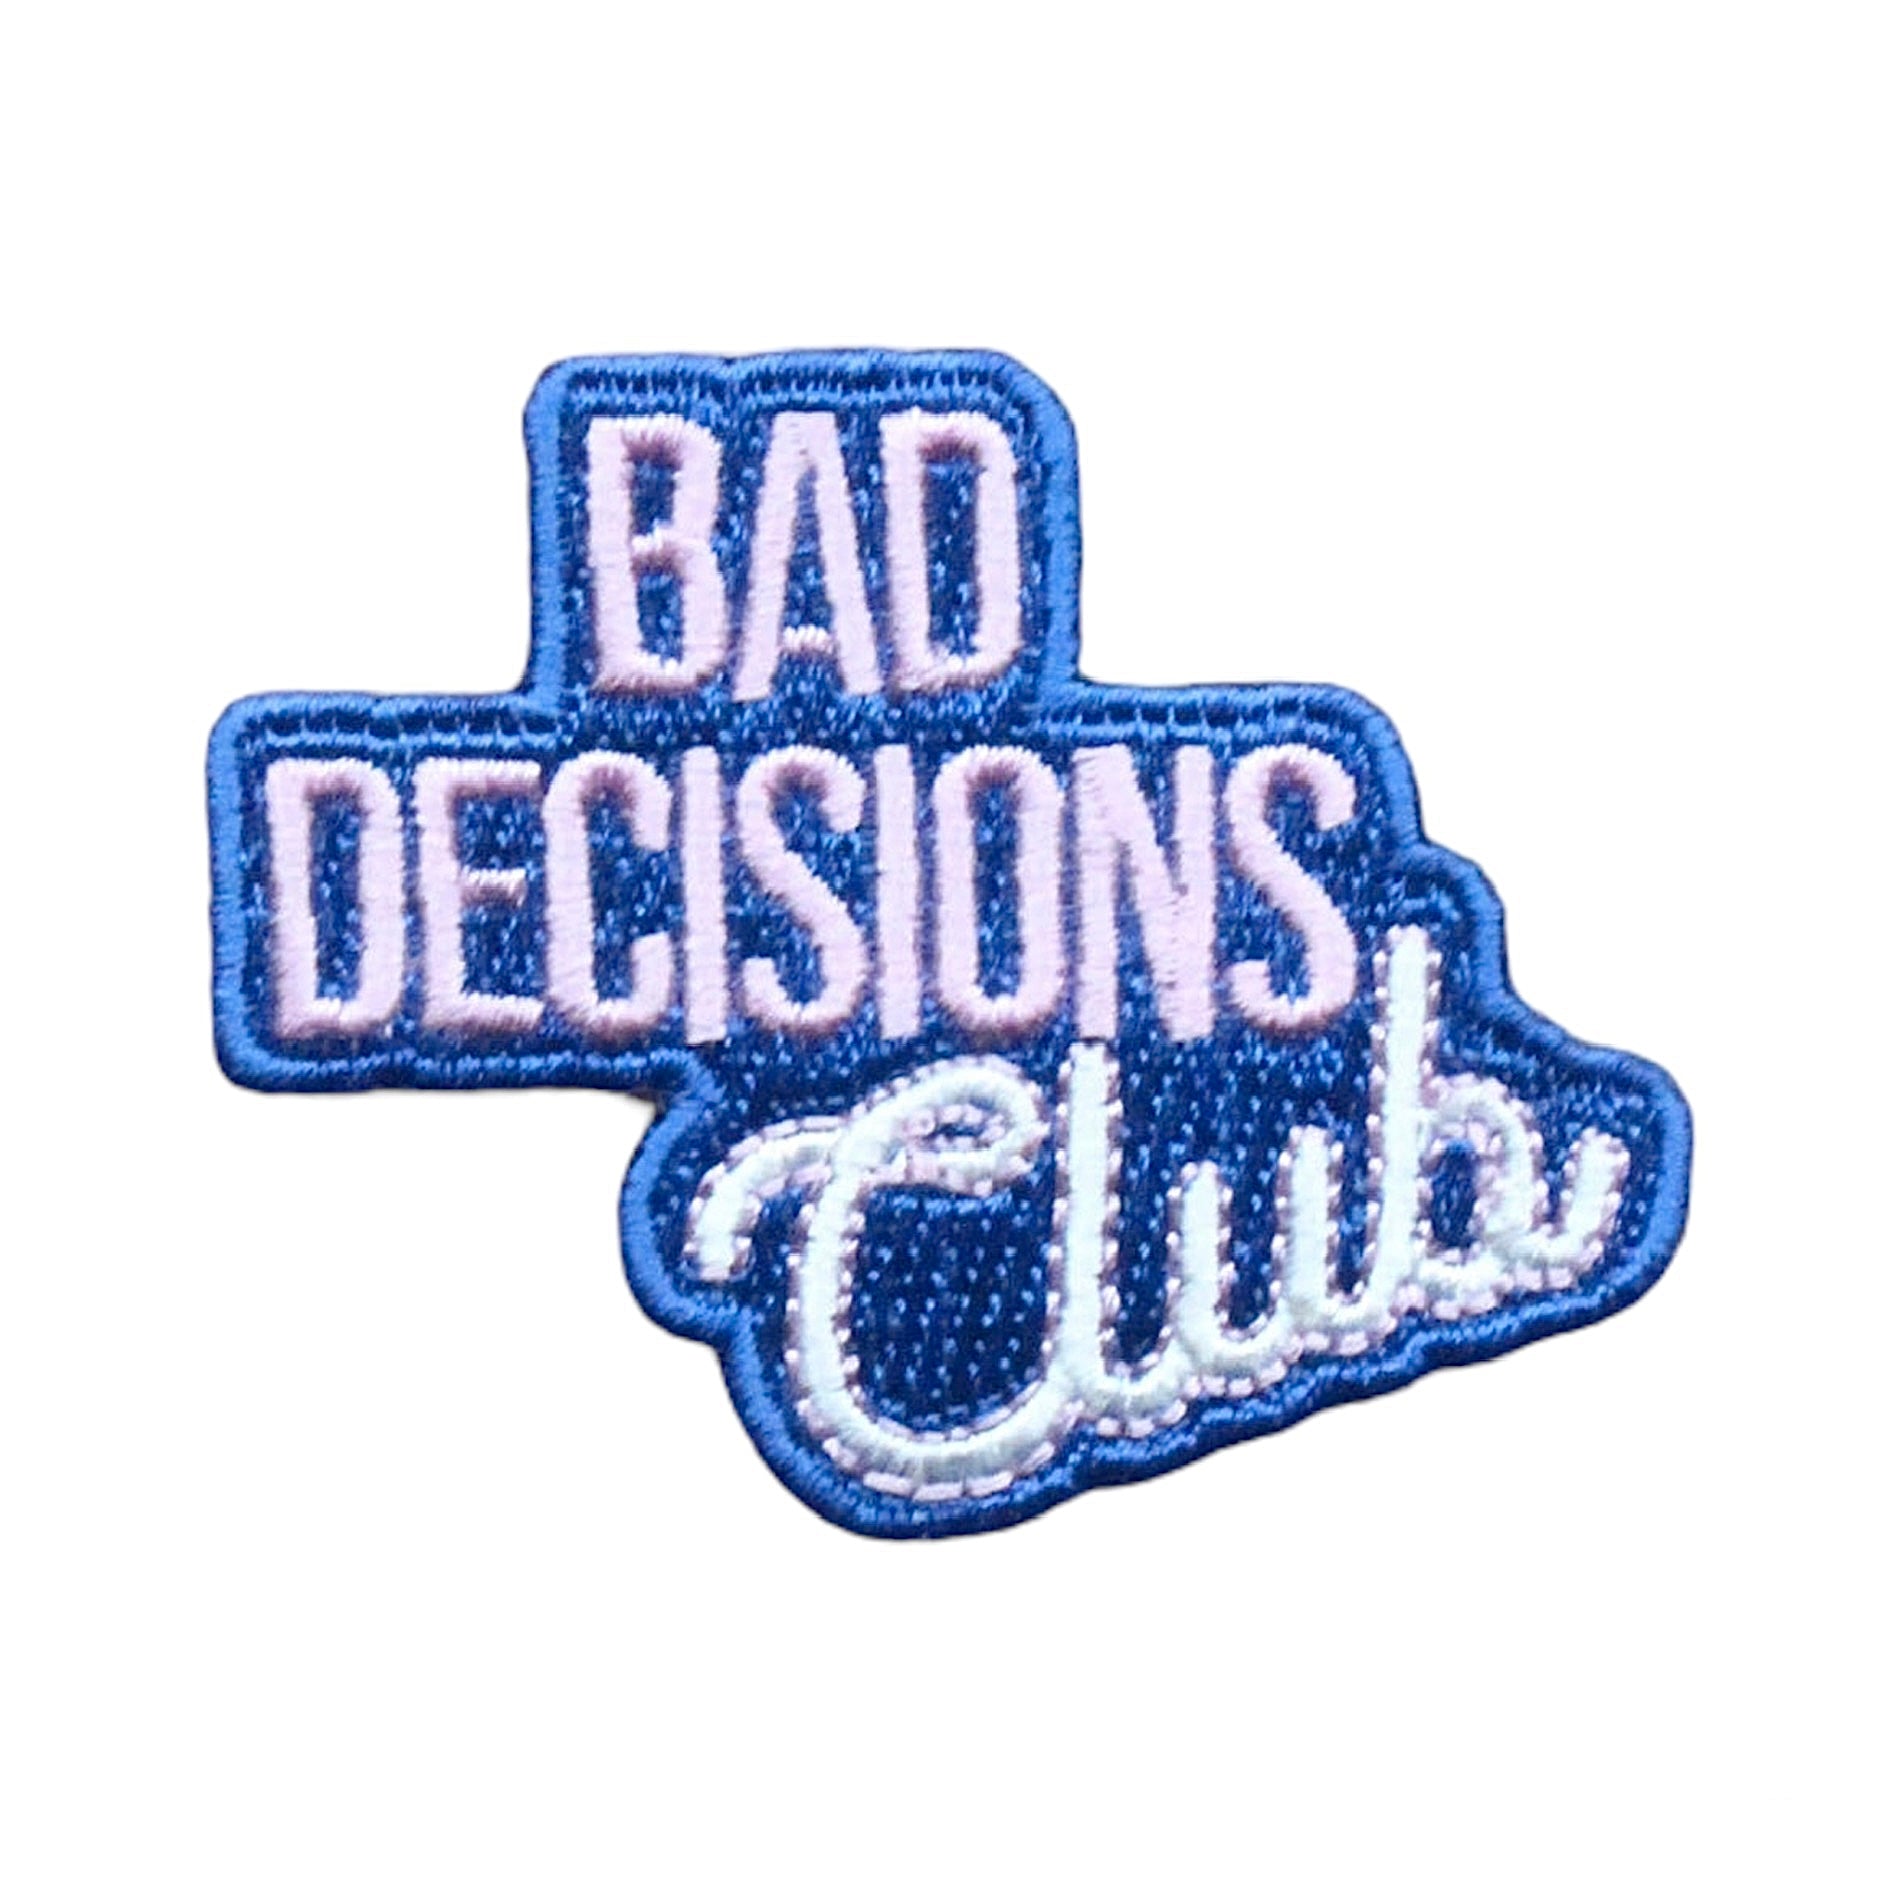 Bad Decision Club Badge